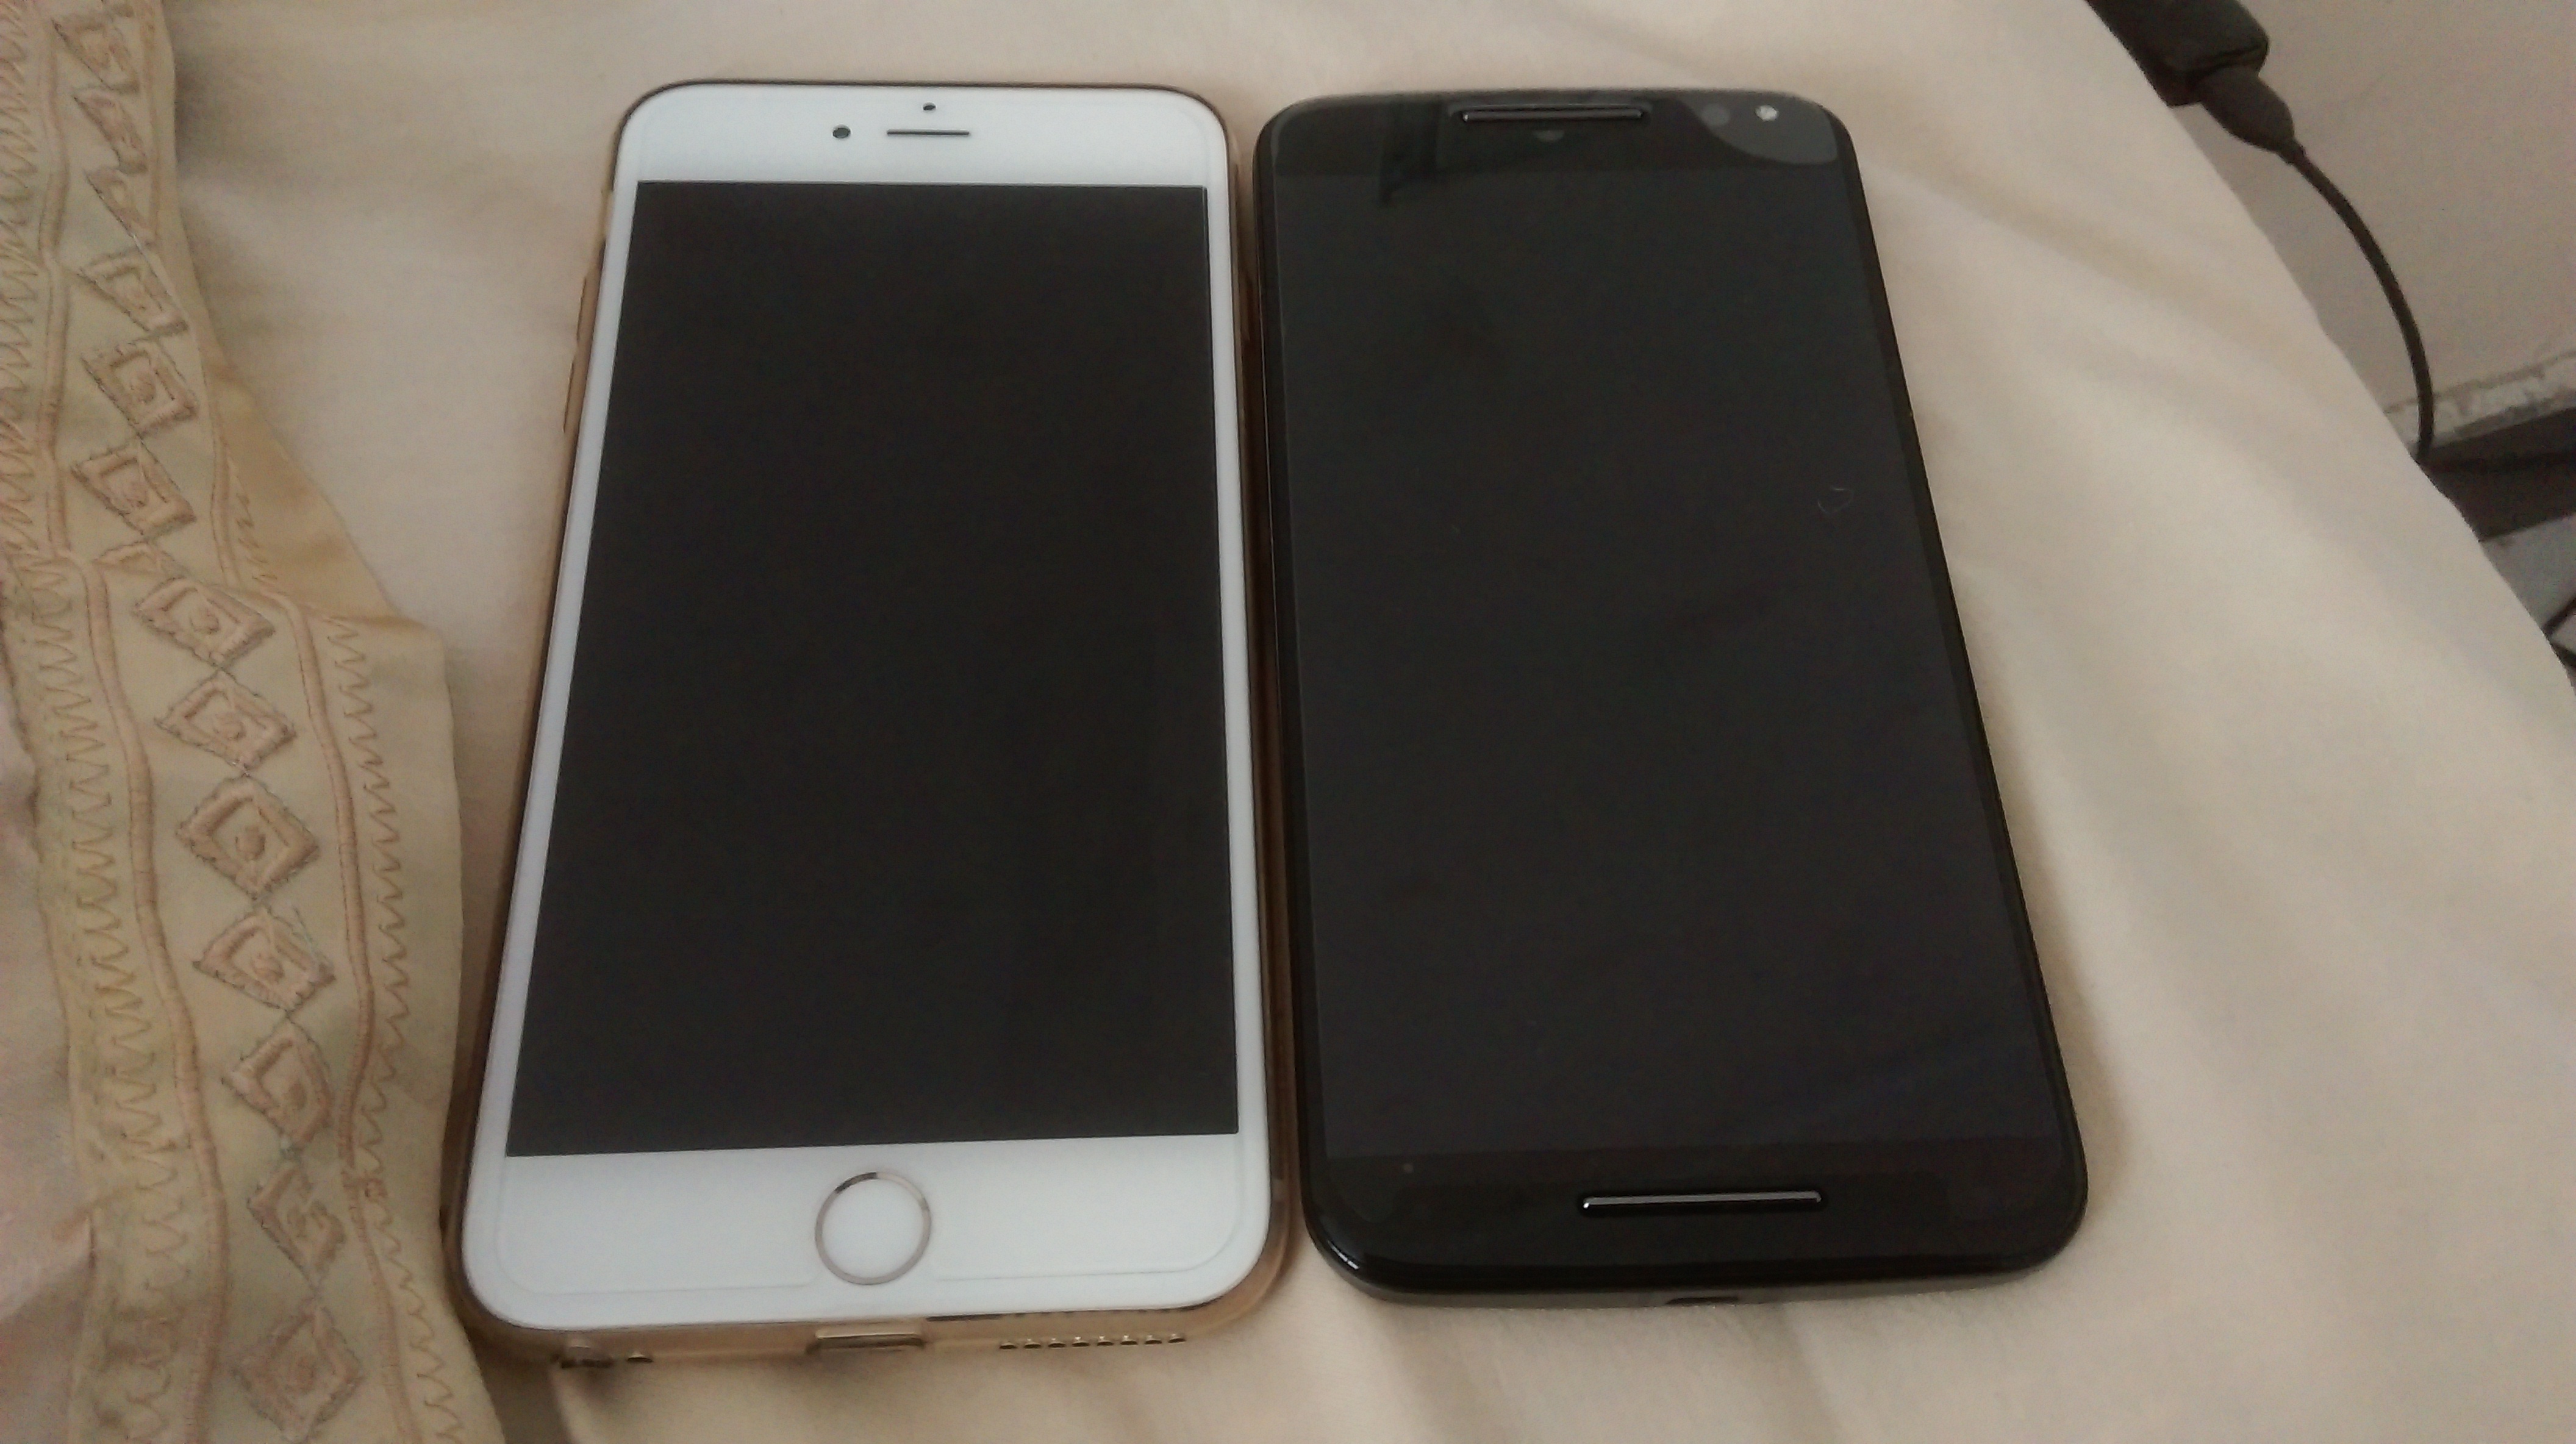 iphone尺寸对比,苹果各机型大小比较图,ine尺寸_大山谷图库